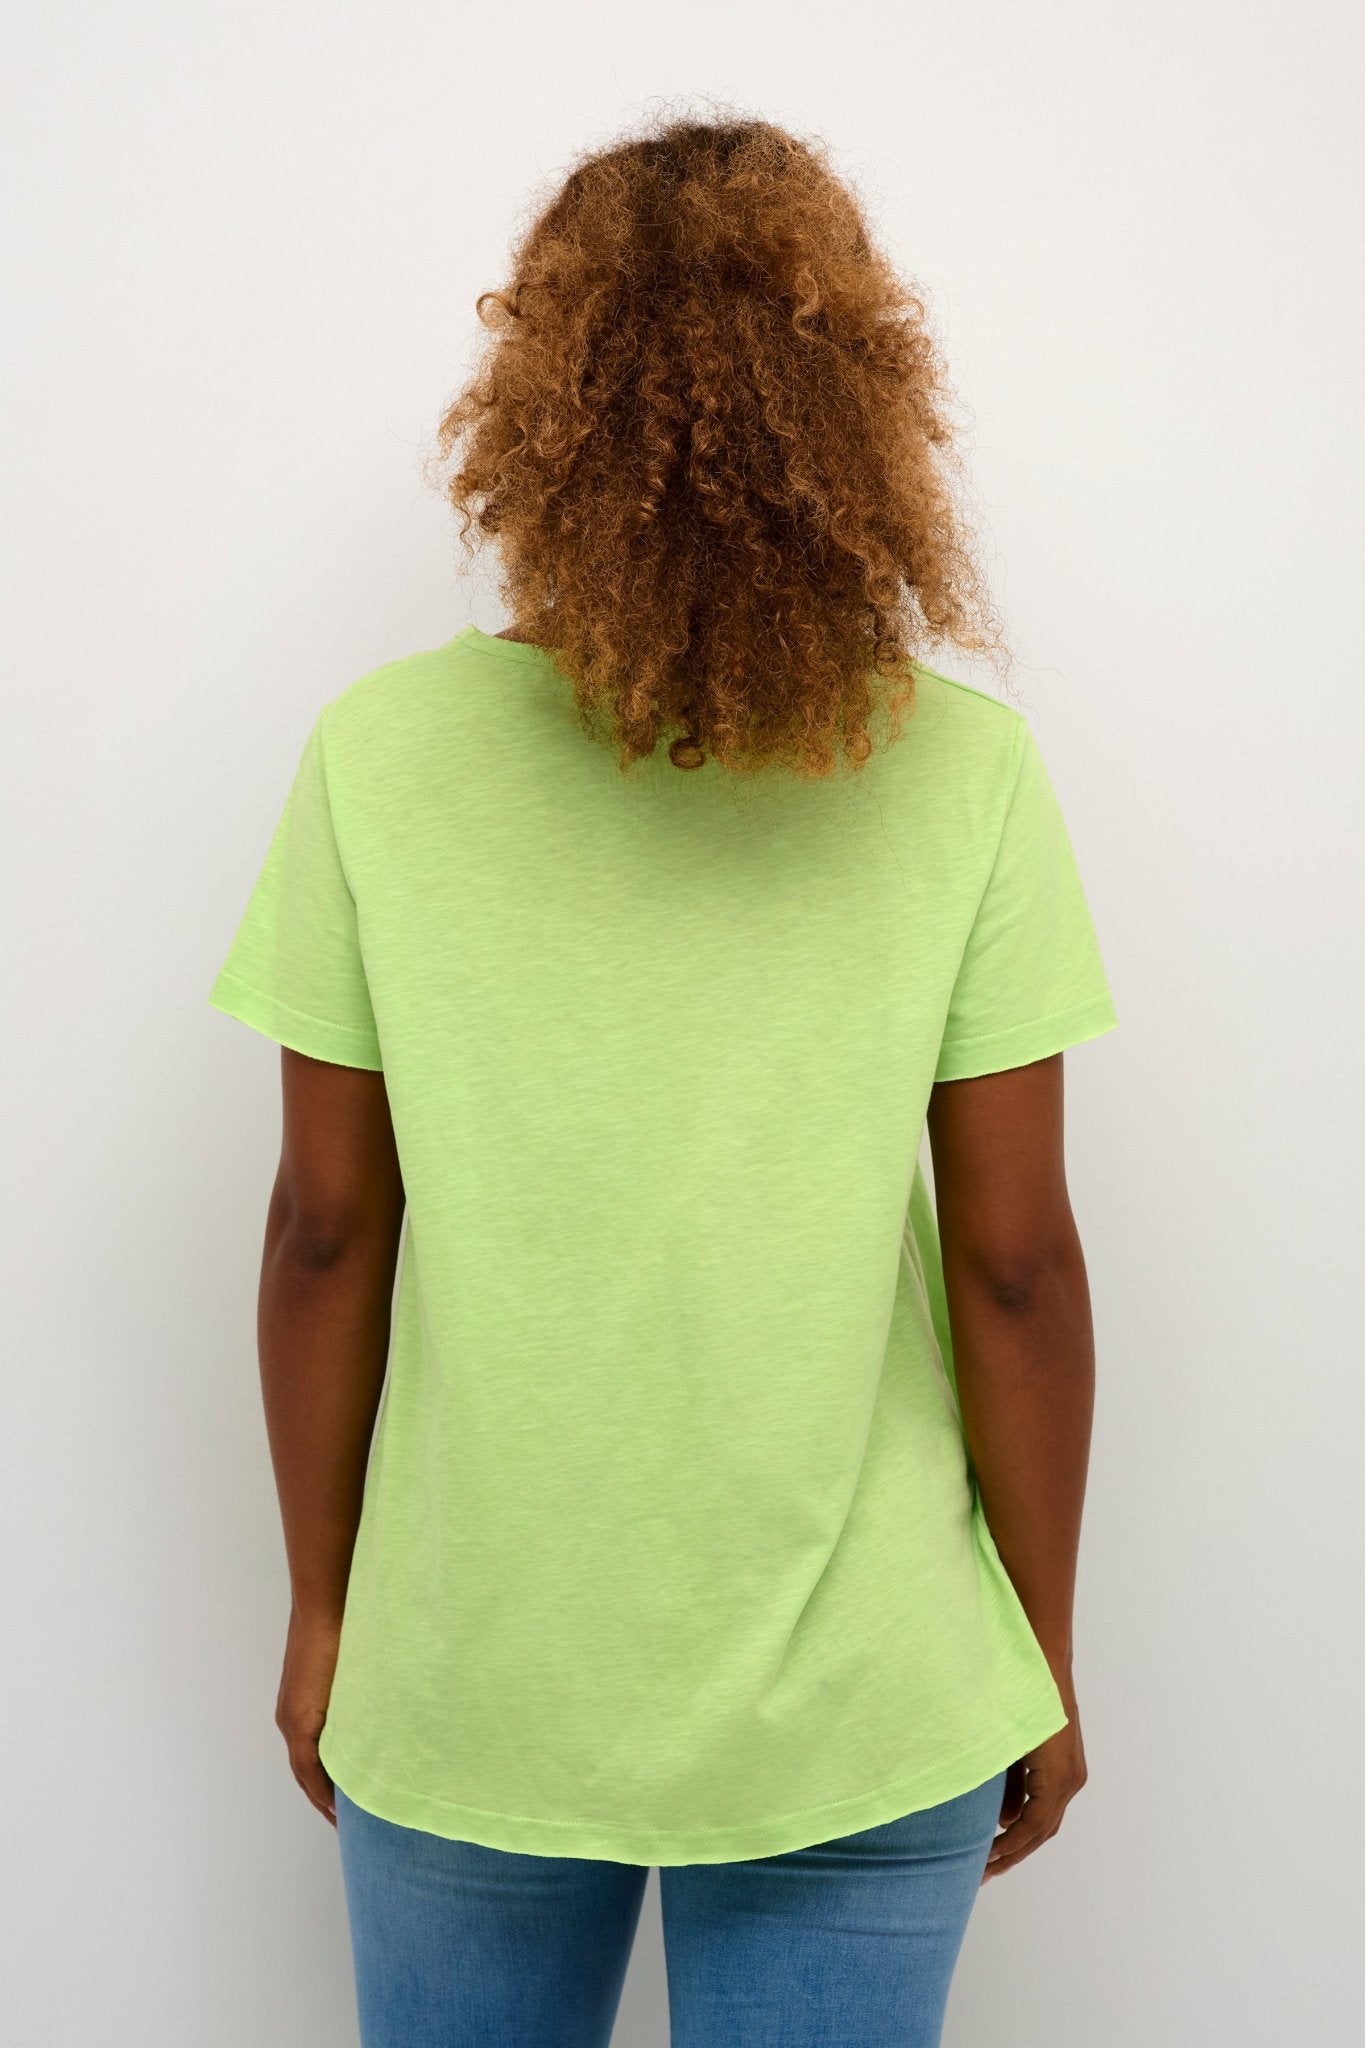 Sina T-shirt by Cream - Power Green - Blue Sky Fashions & Lingerie